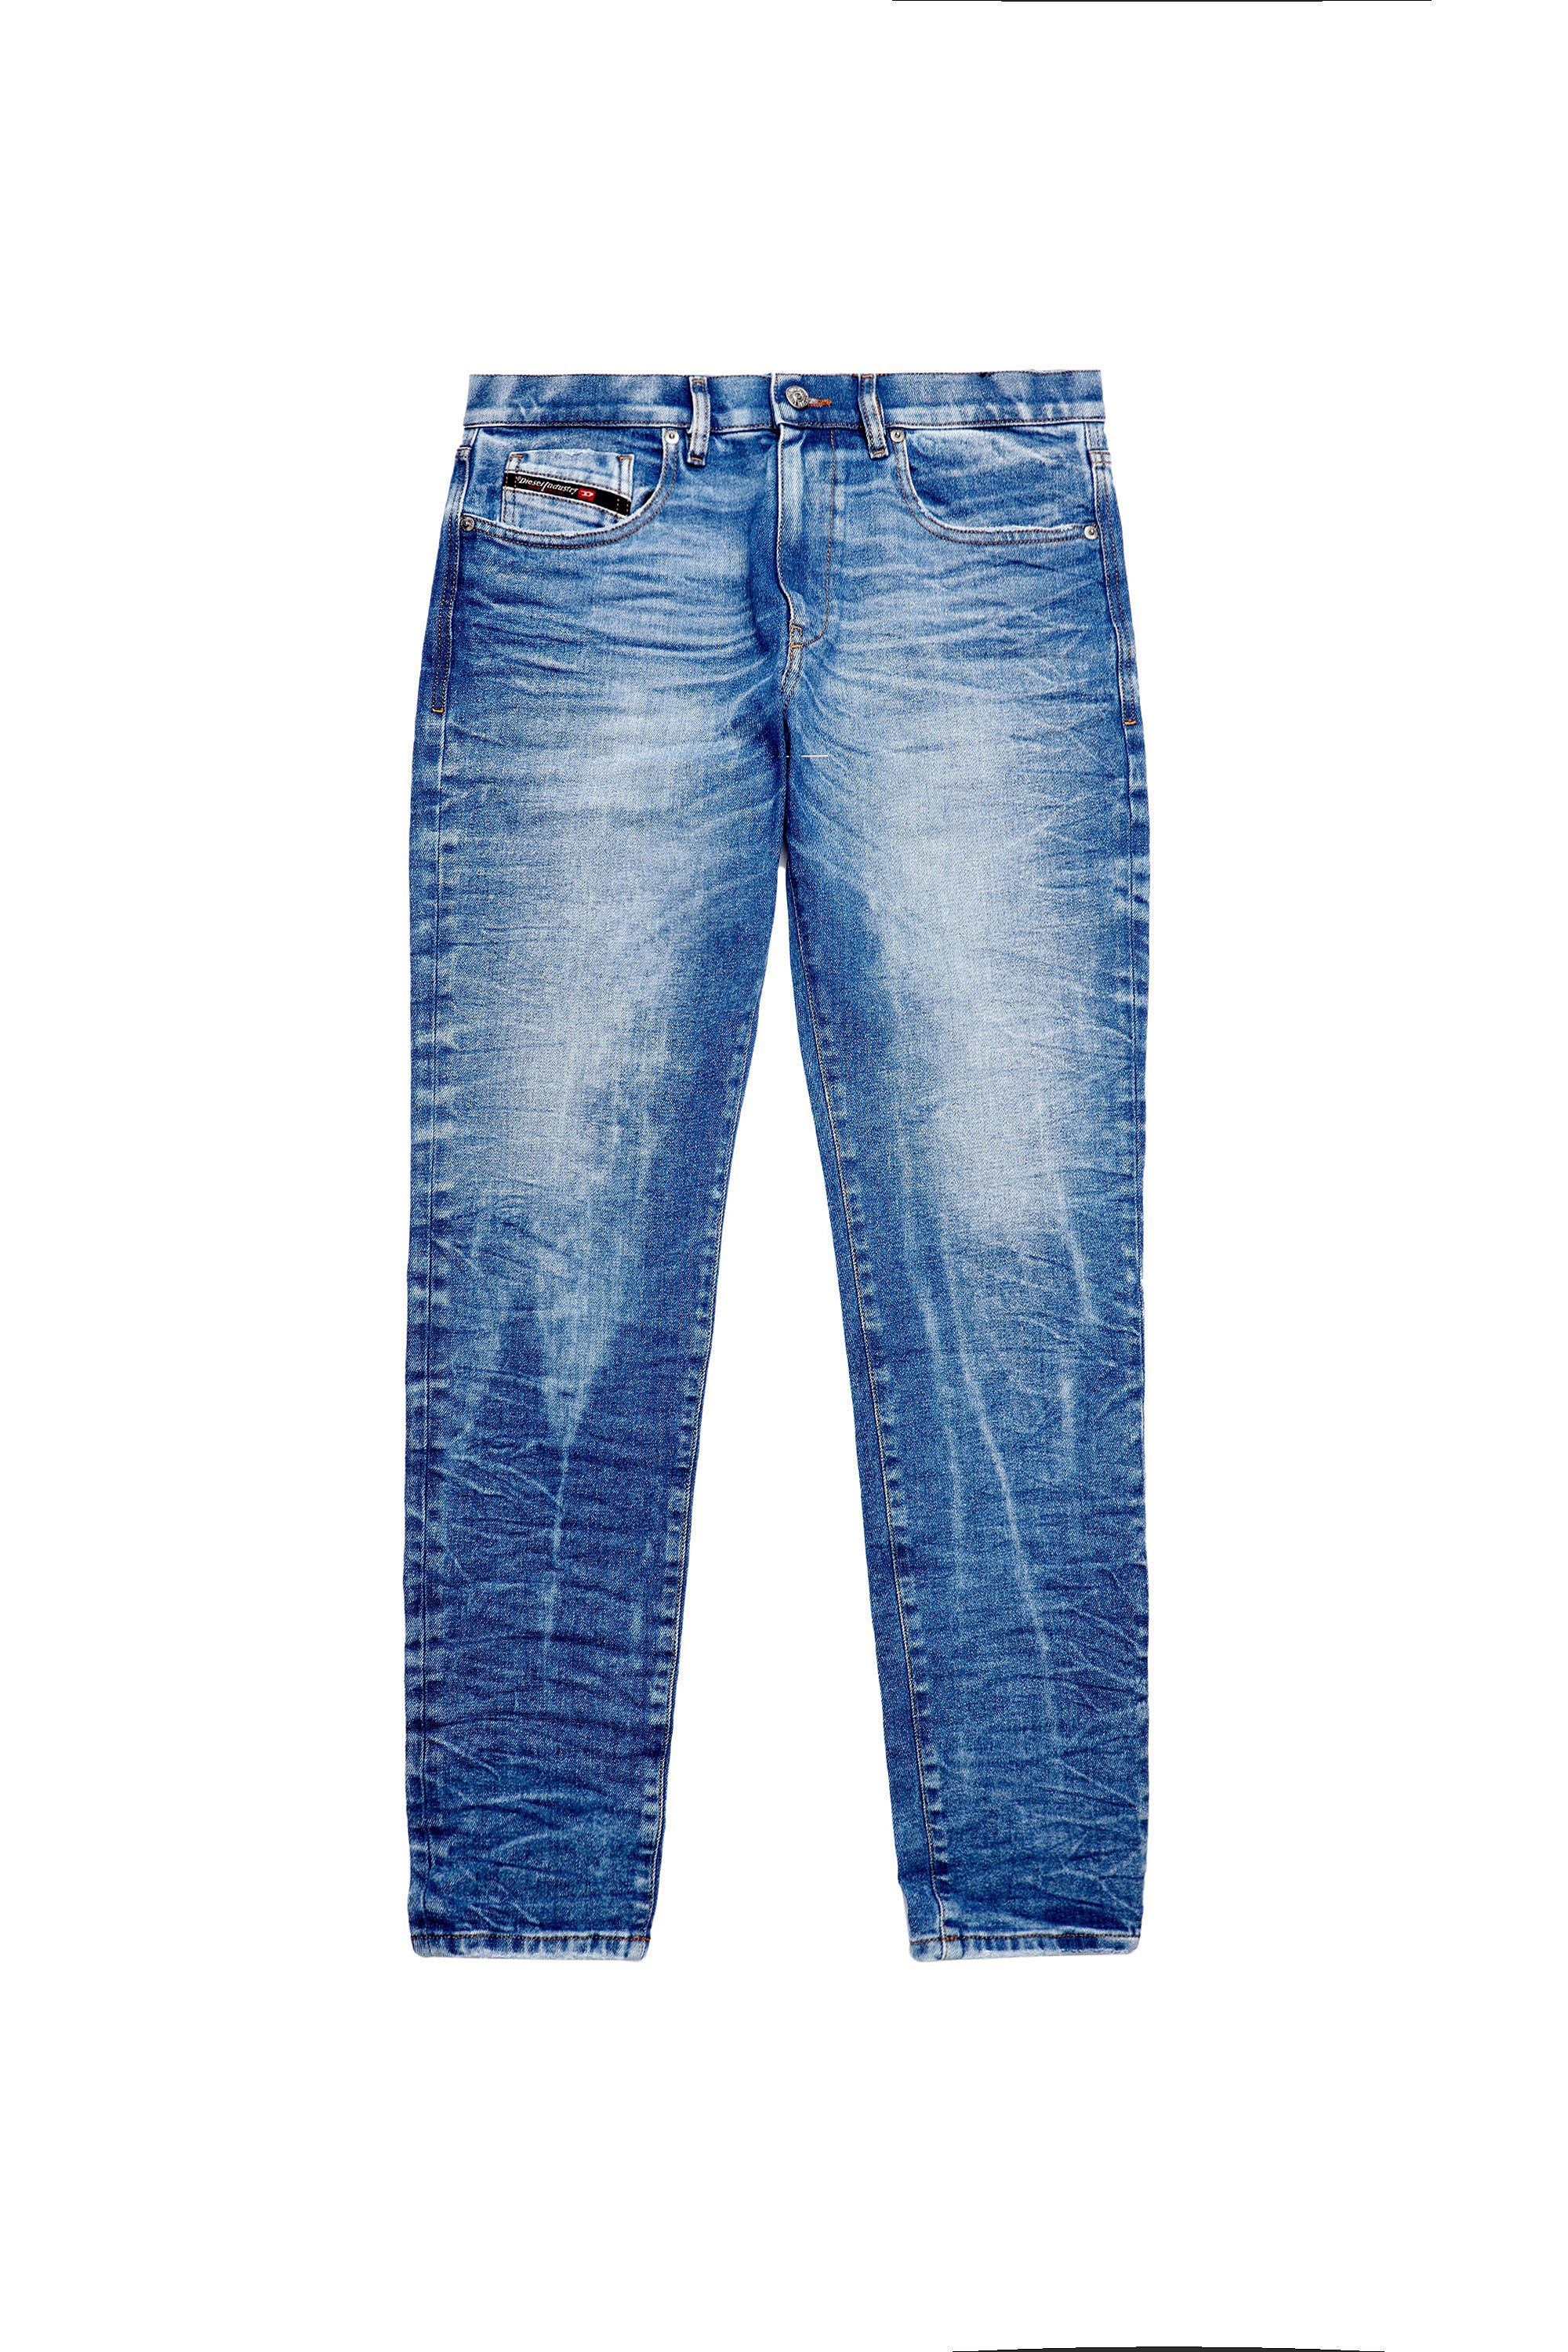 Diesel - 2019 D-STRUKT 009MH Slim Jeans,  - Image 2